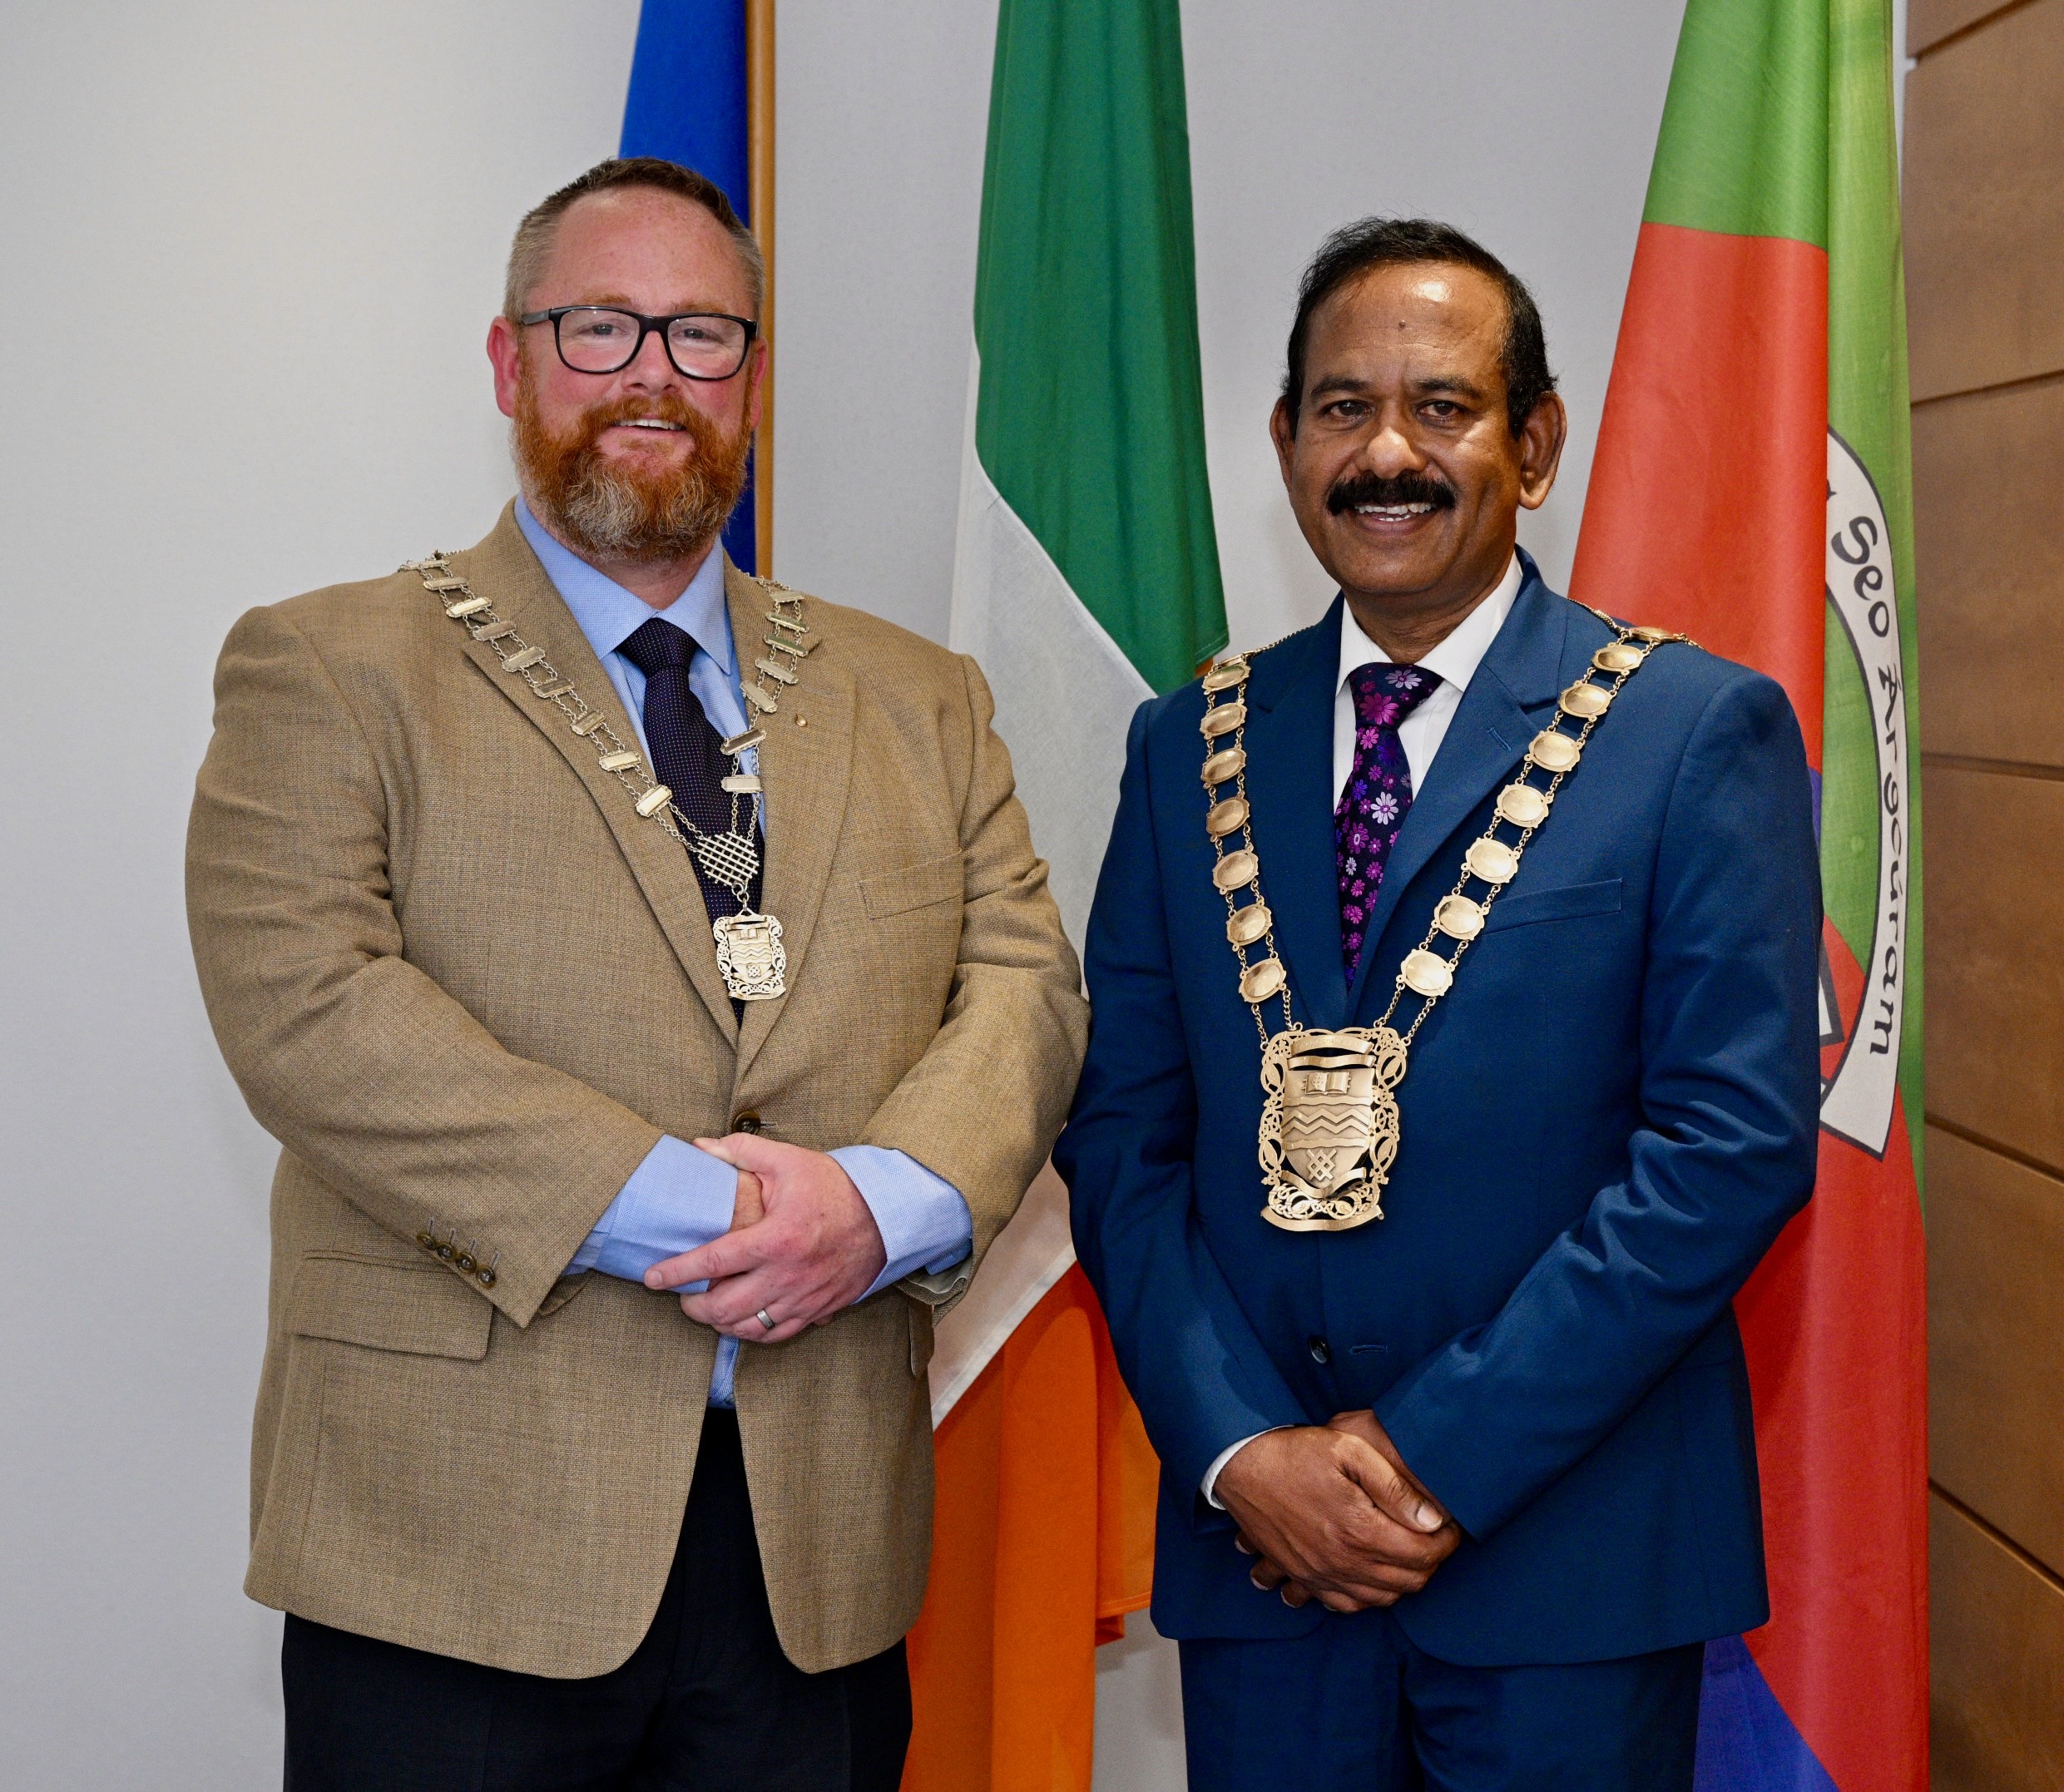 New Mayor and Deputy Mayor elected at South Dublin County Council sumamry image